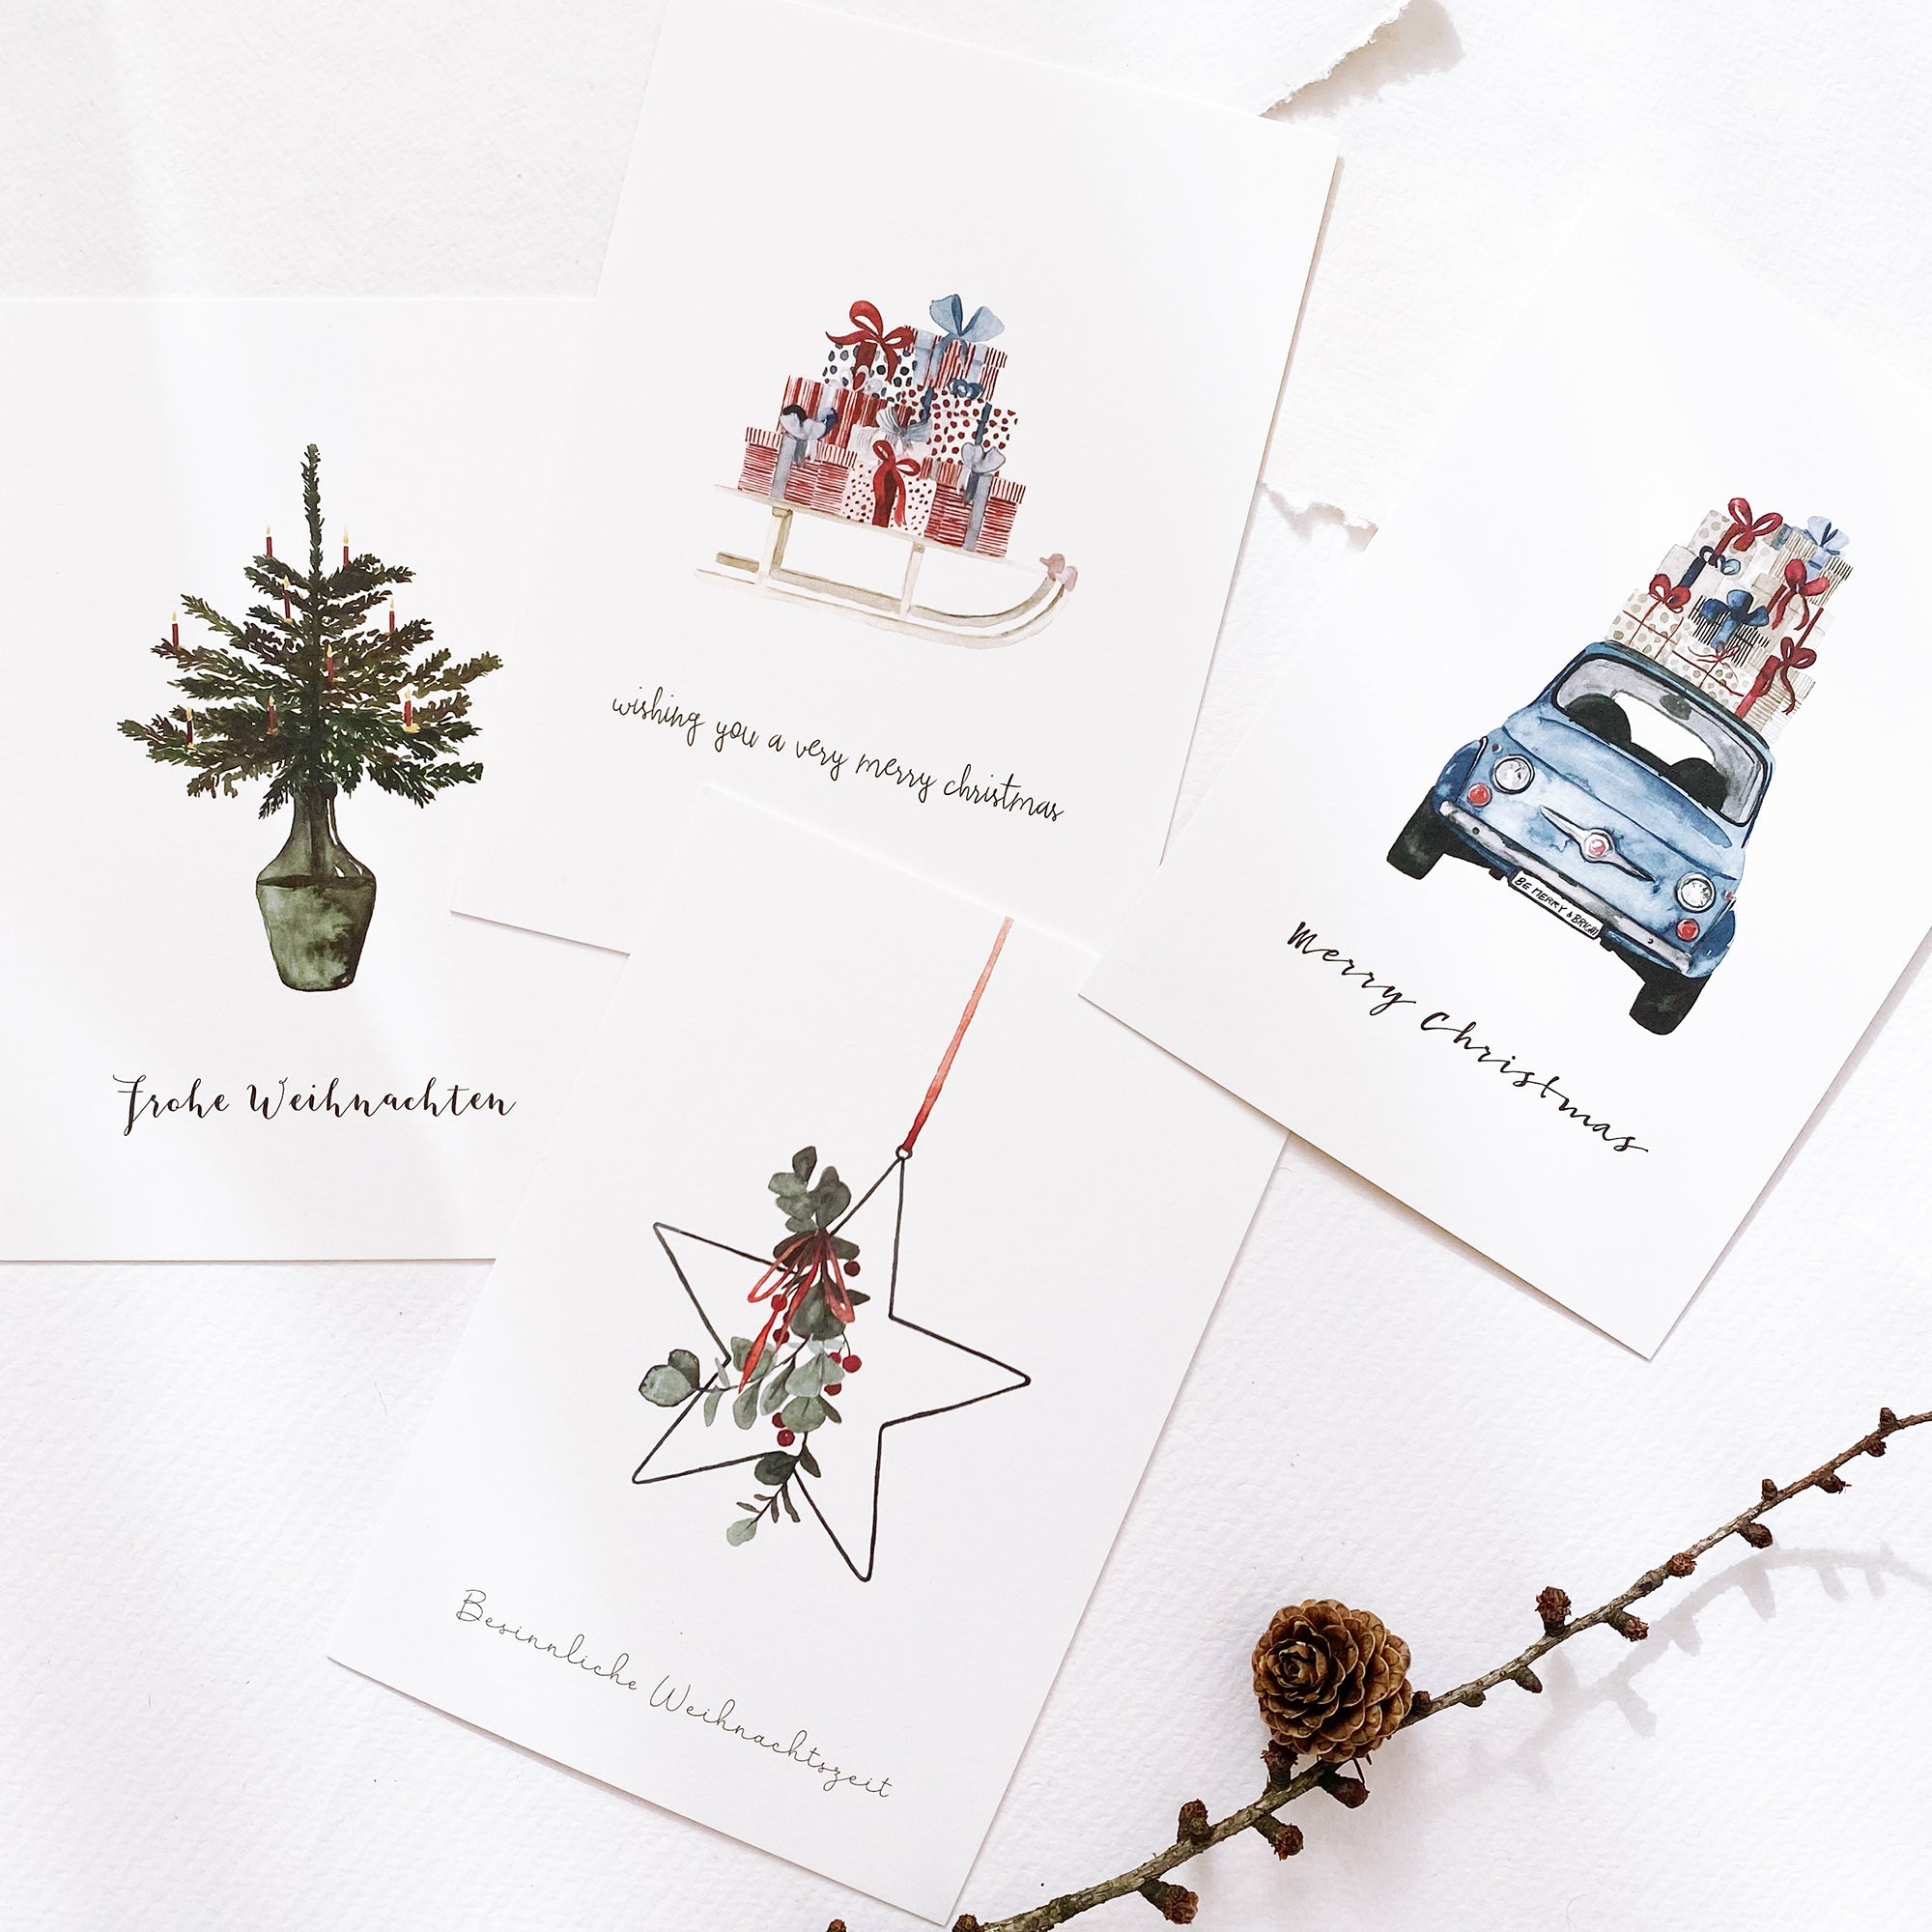 8er Set Postkarten · Weihnachtskarten Set IV Postkarte Atelier Leo la Douce 